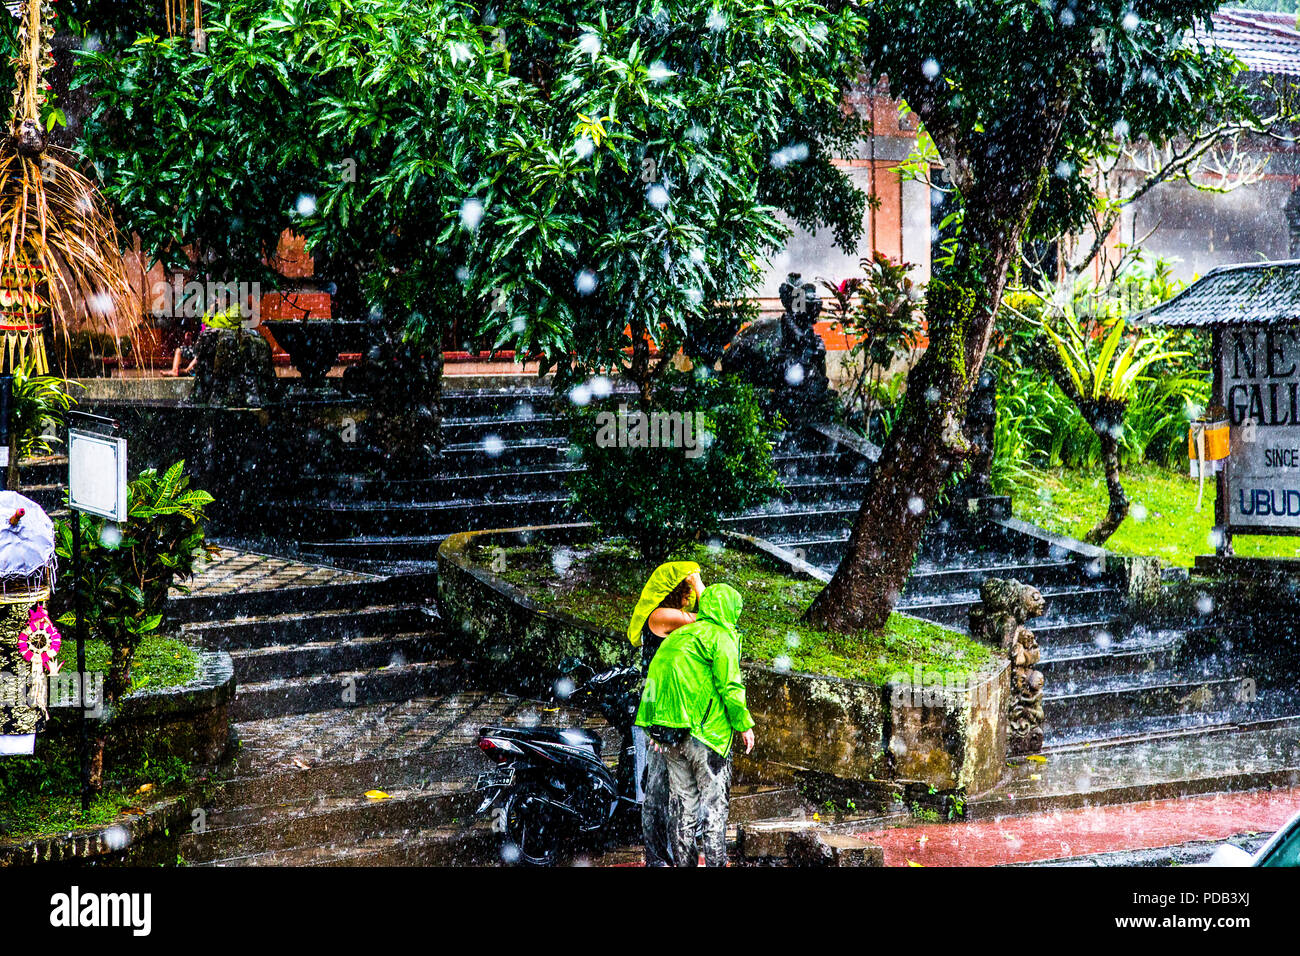 Two people in green rainwear in a tropcial downpour in Ubud, Bali. Fast Shutterspeed to freeze raindrops. Stock Photo